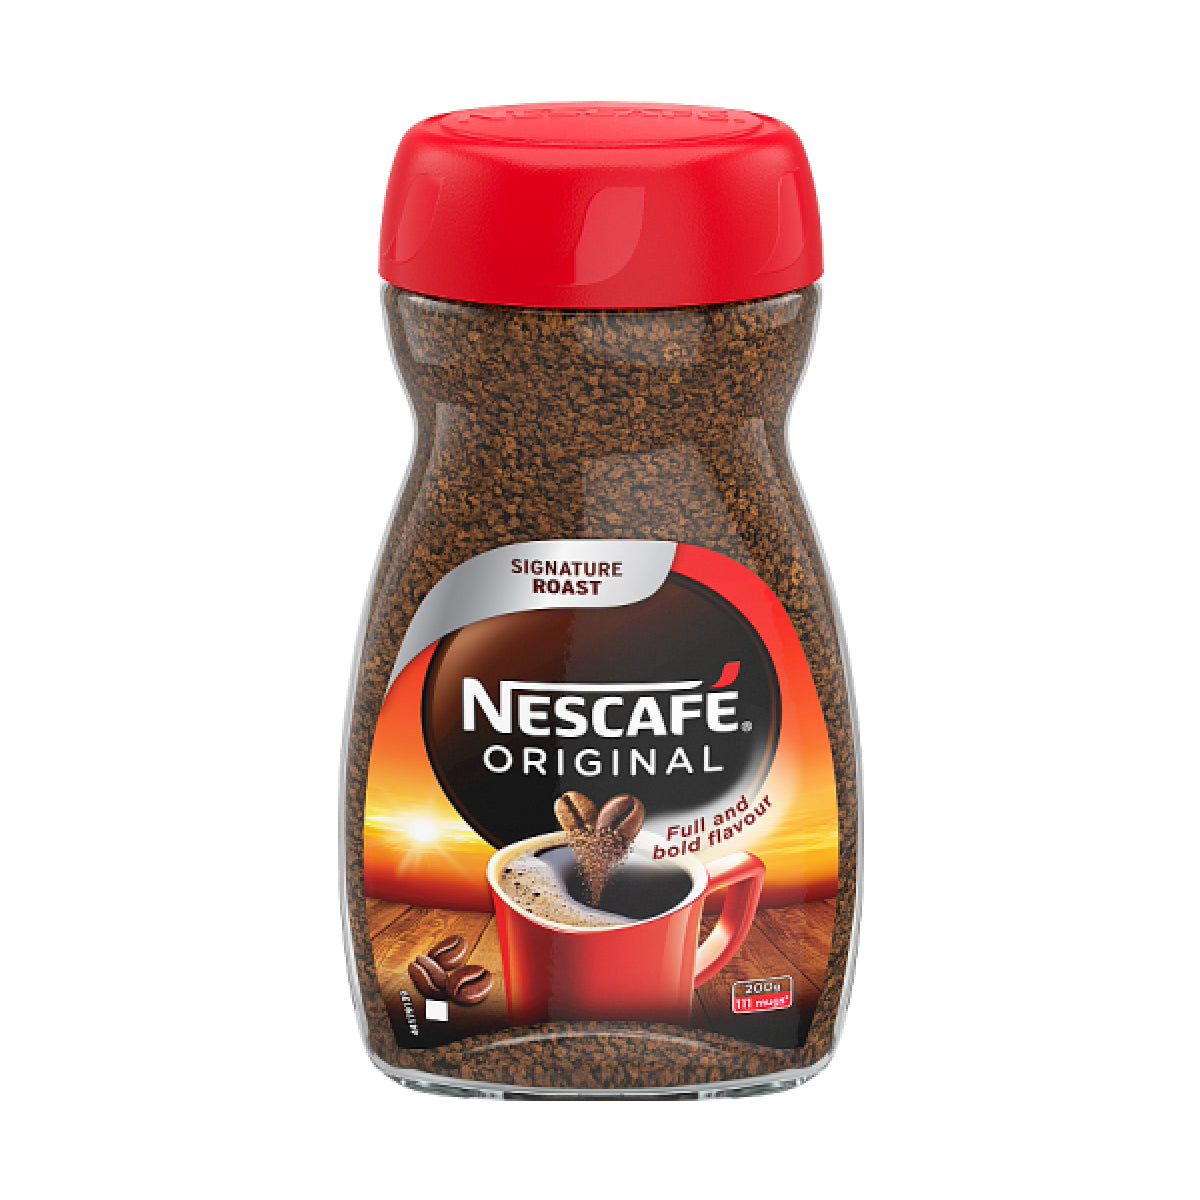 Nescafe - Classic - Signature Roast - Instant Coffee - 200g (Imported)